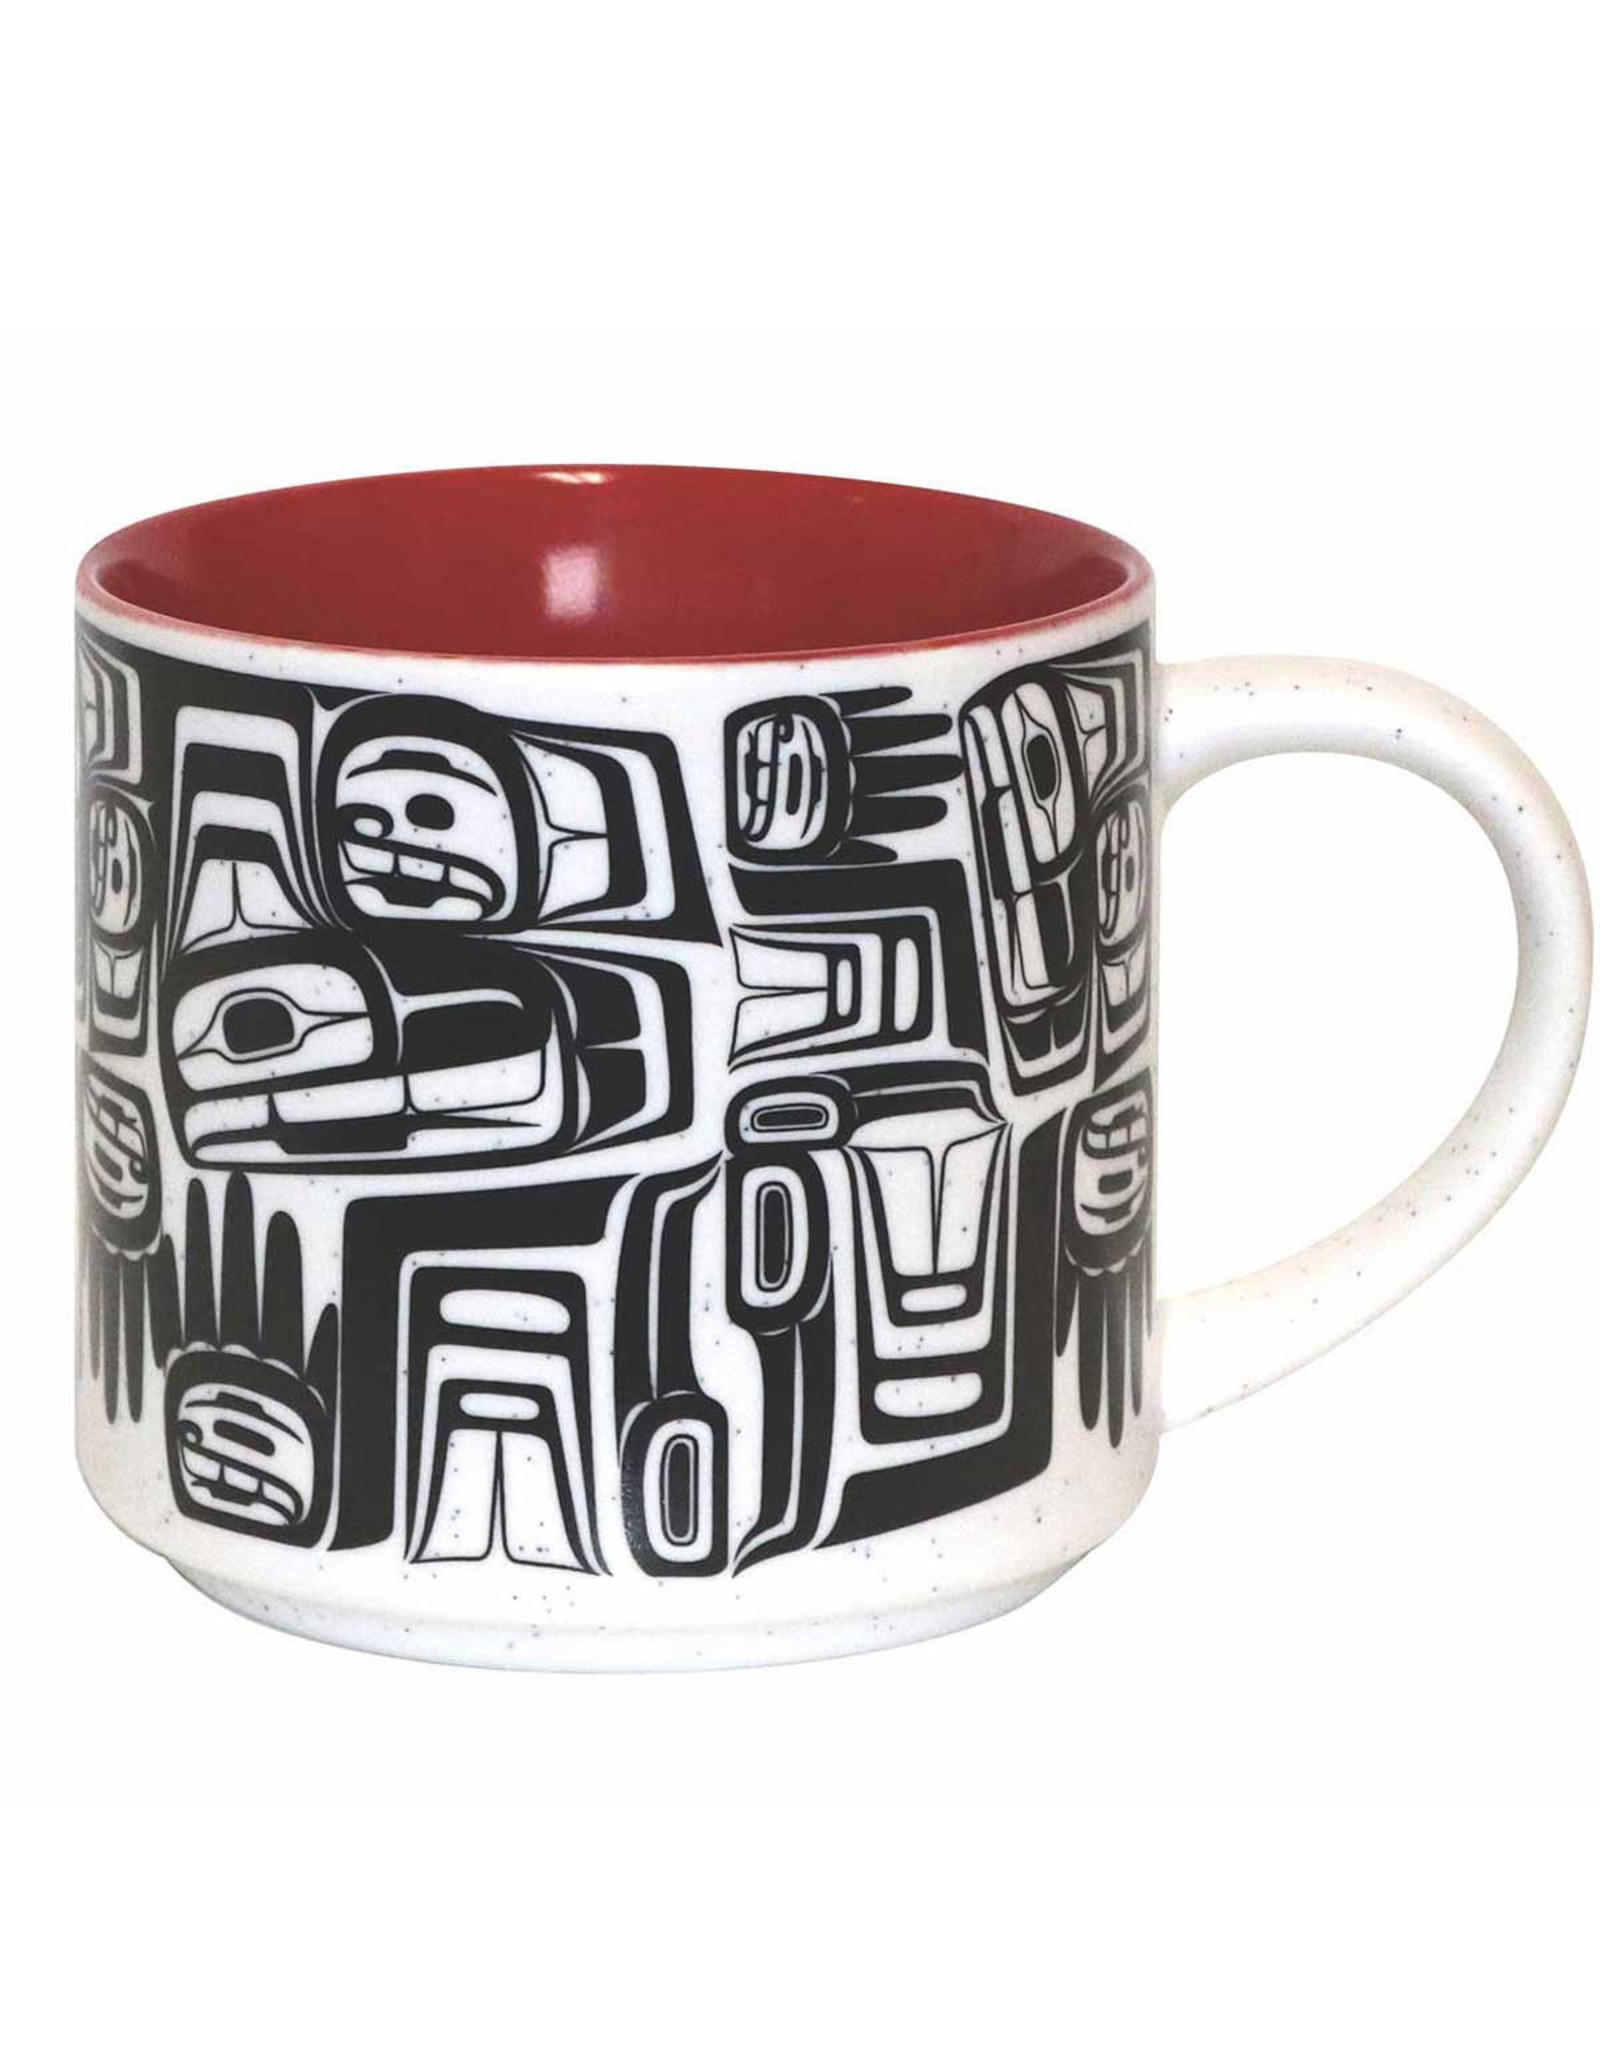 Ceramic Mug - Eagle Crest (CMUG23)